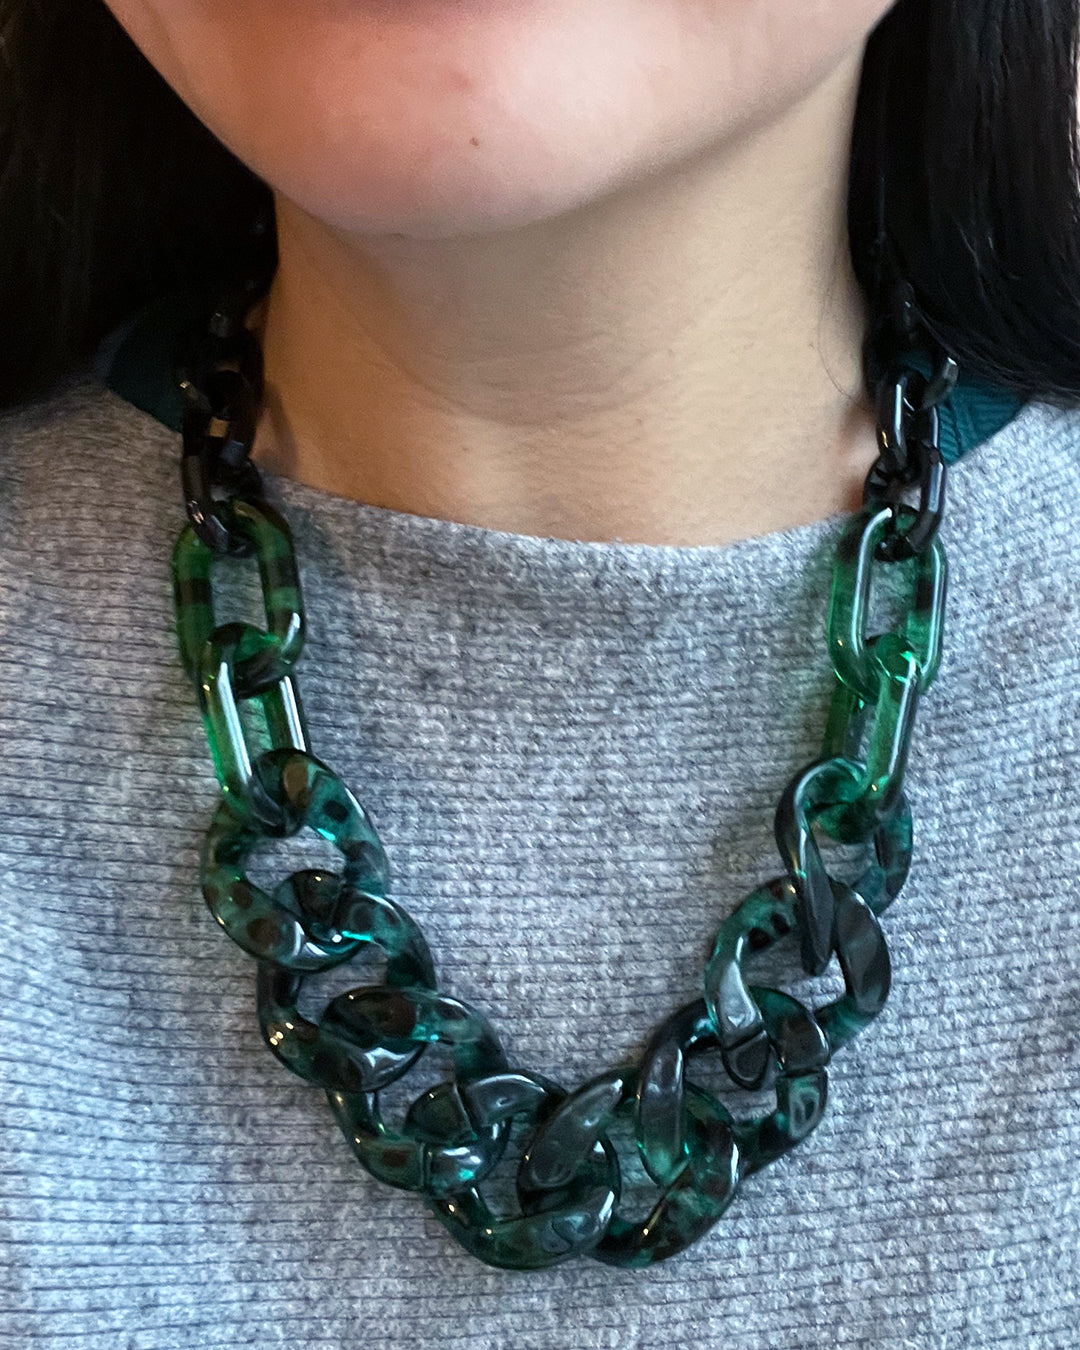 Infinite Colors Livia 2 Necklace -  Green Tortoise Black